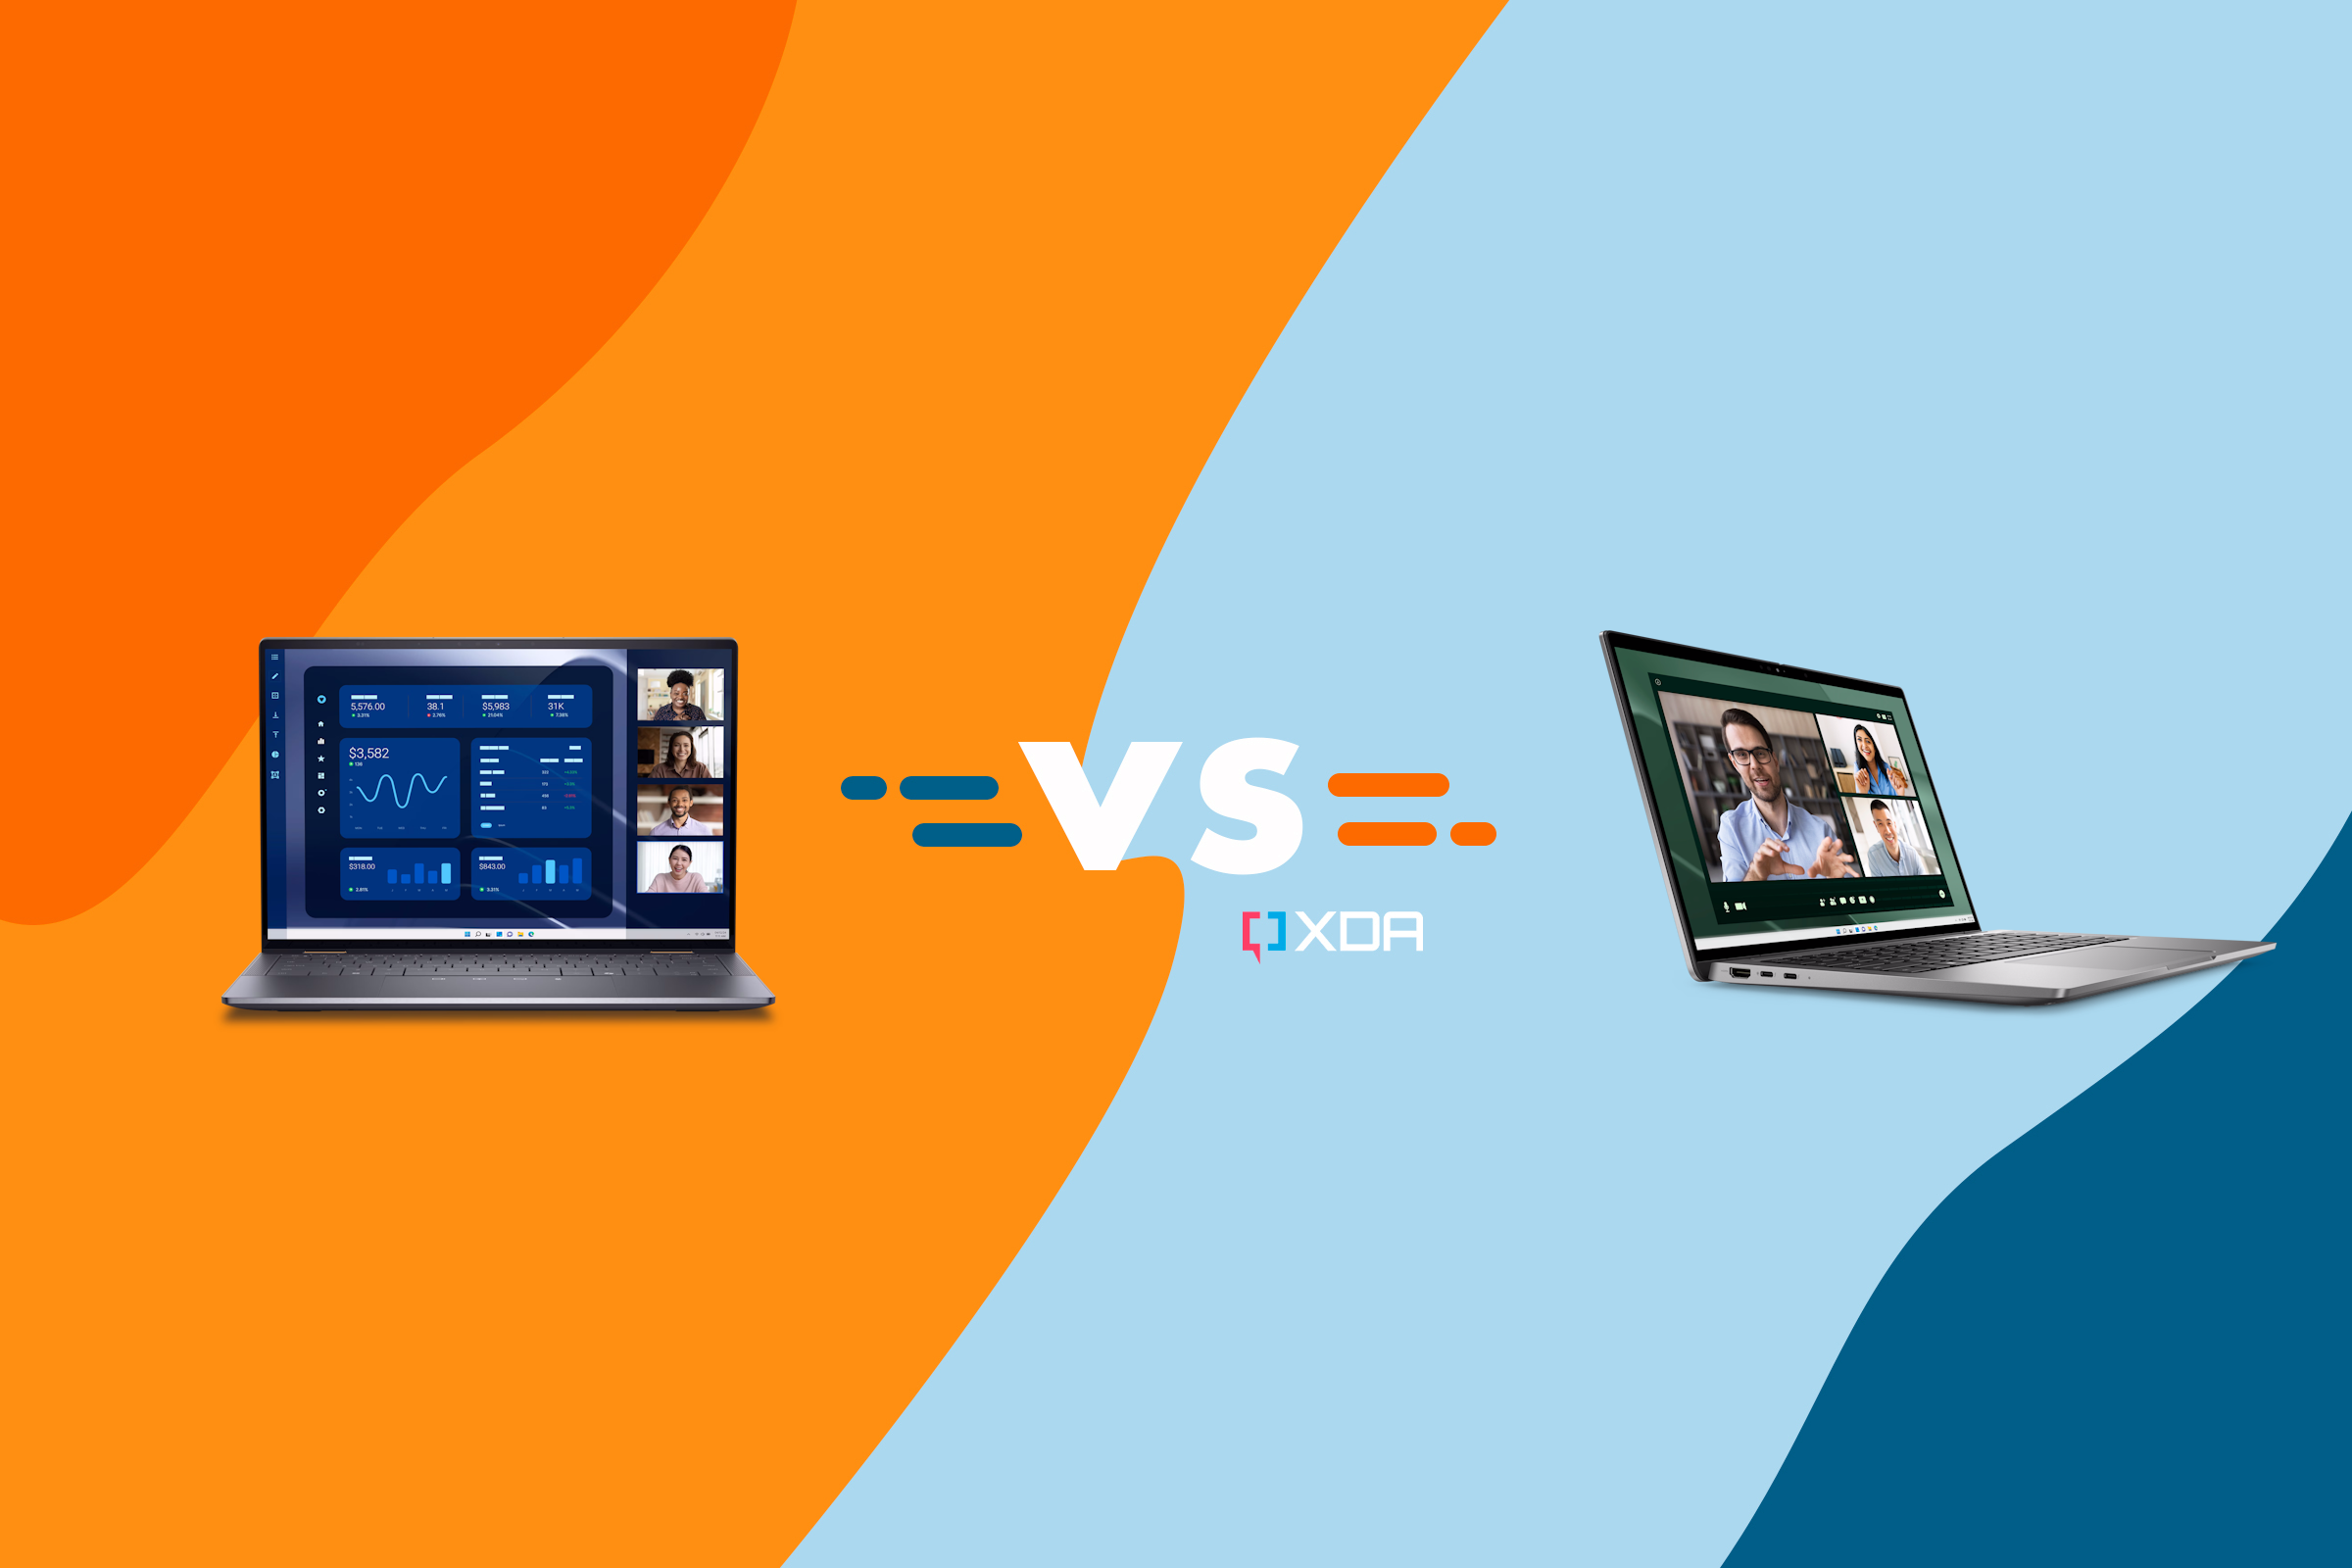 Dell Latitude 9450 2-in-1 vs Latitude 7450 2-in-1: Which should you buy?